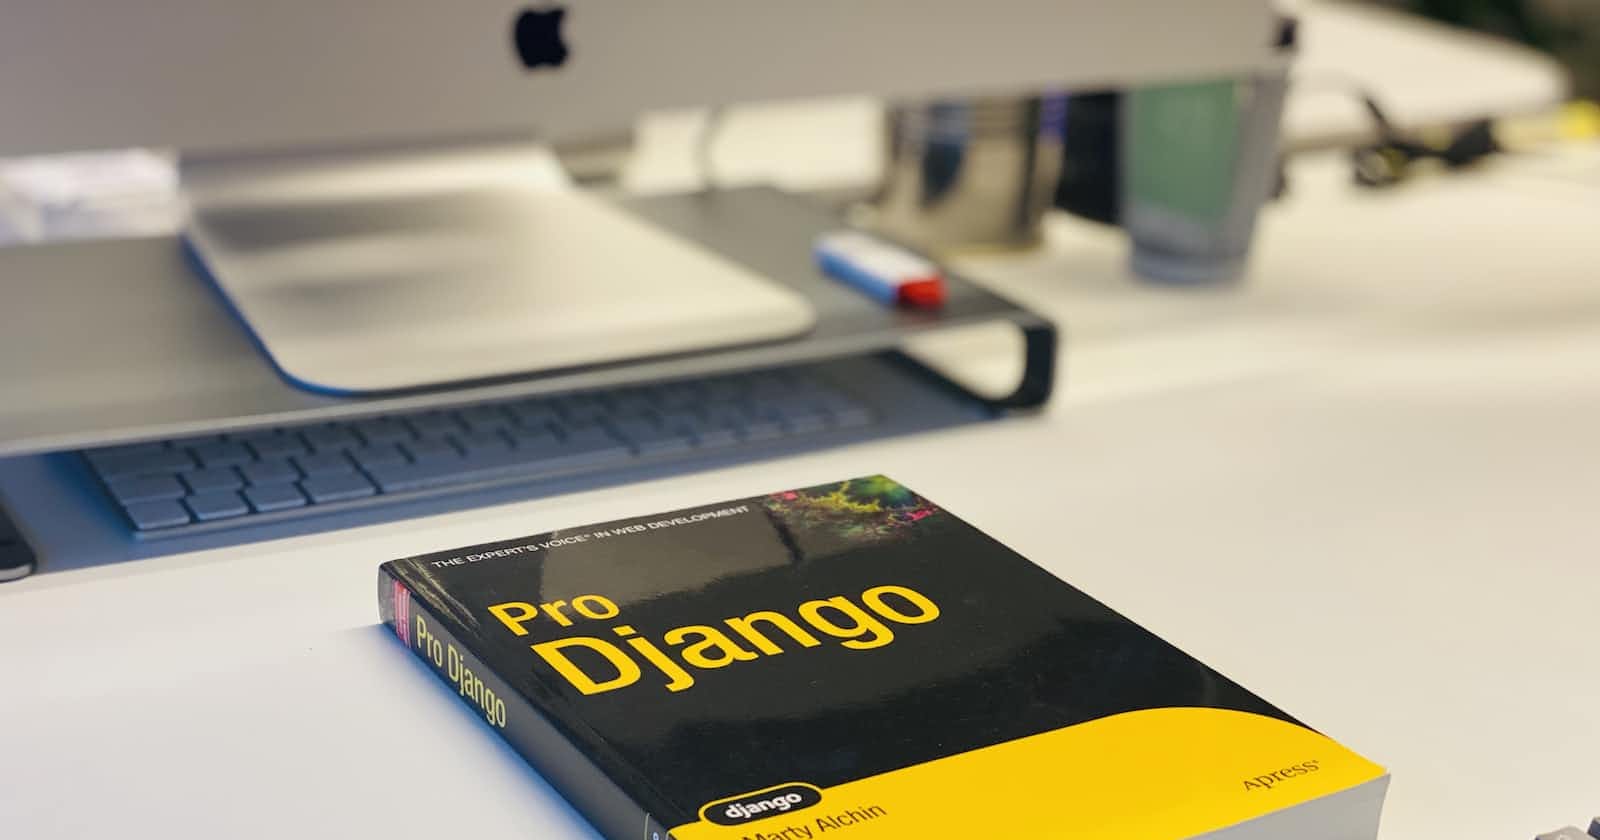 Build a Custom Command Line Tool with Django's Management Commands